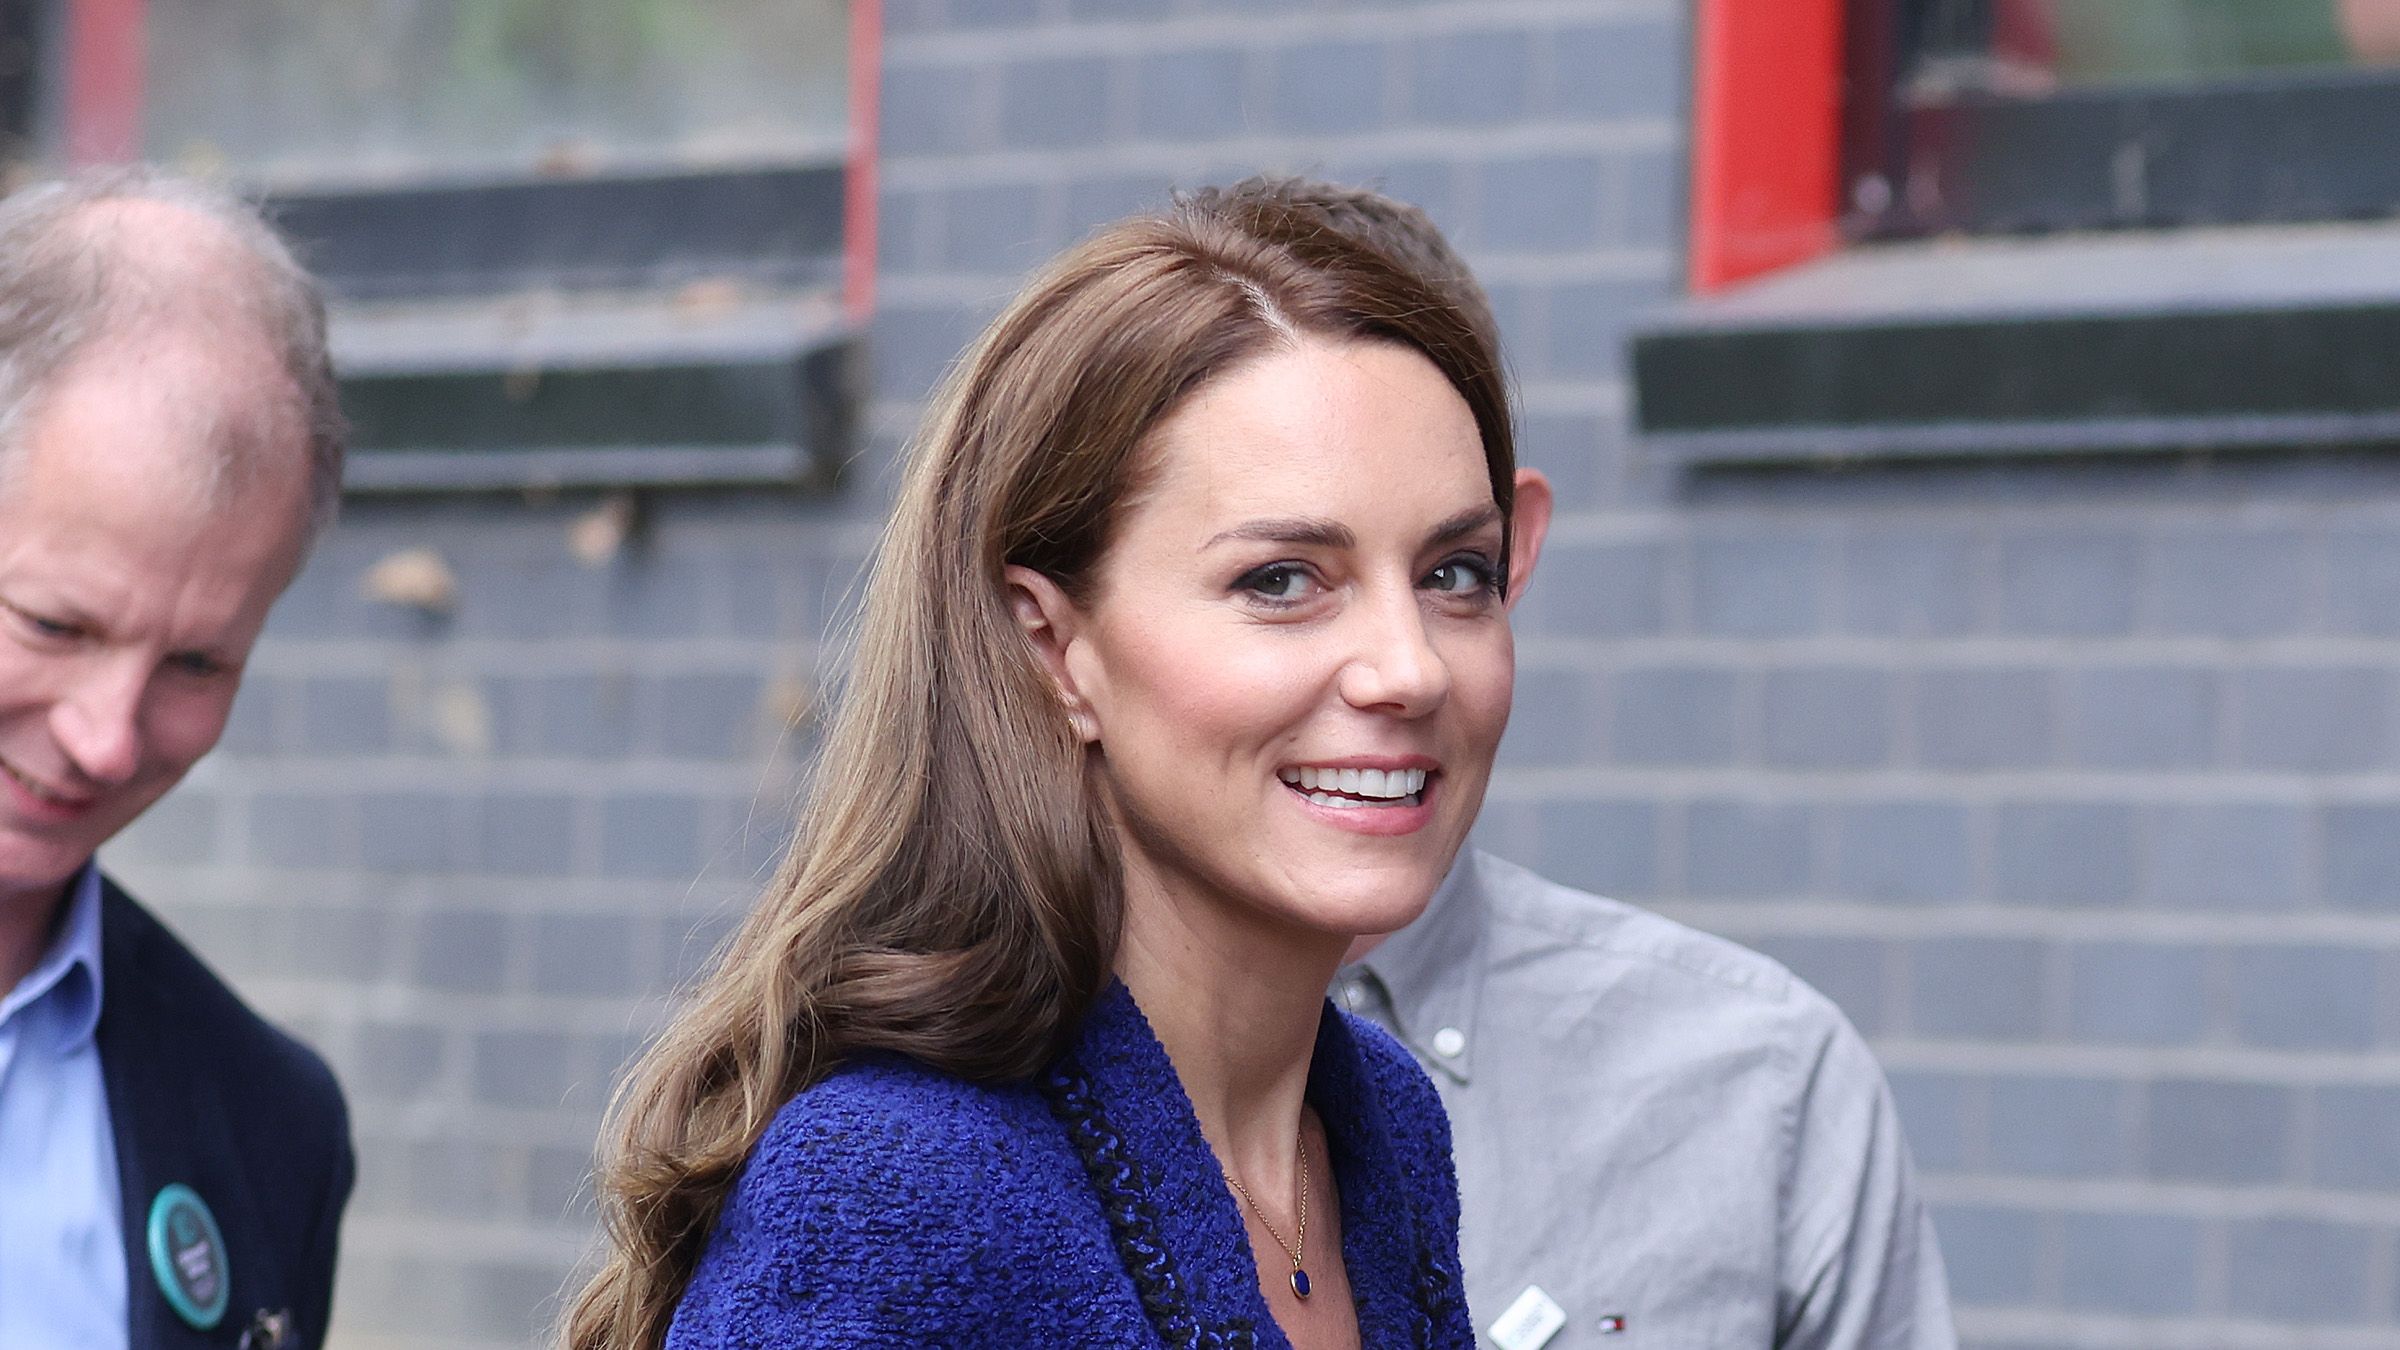 Kate Middleton wears vintage Chanel blazer at Olympic Park